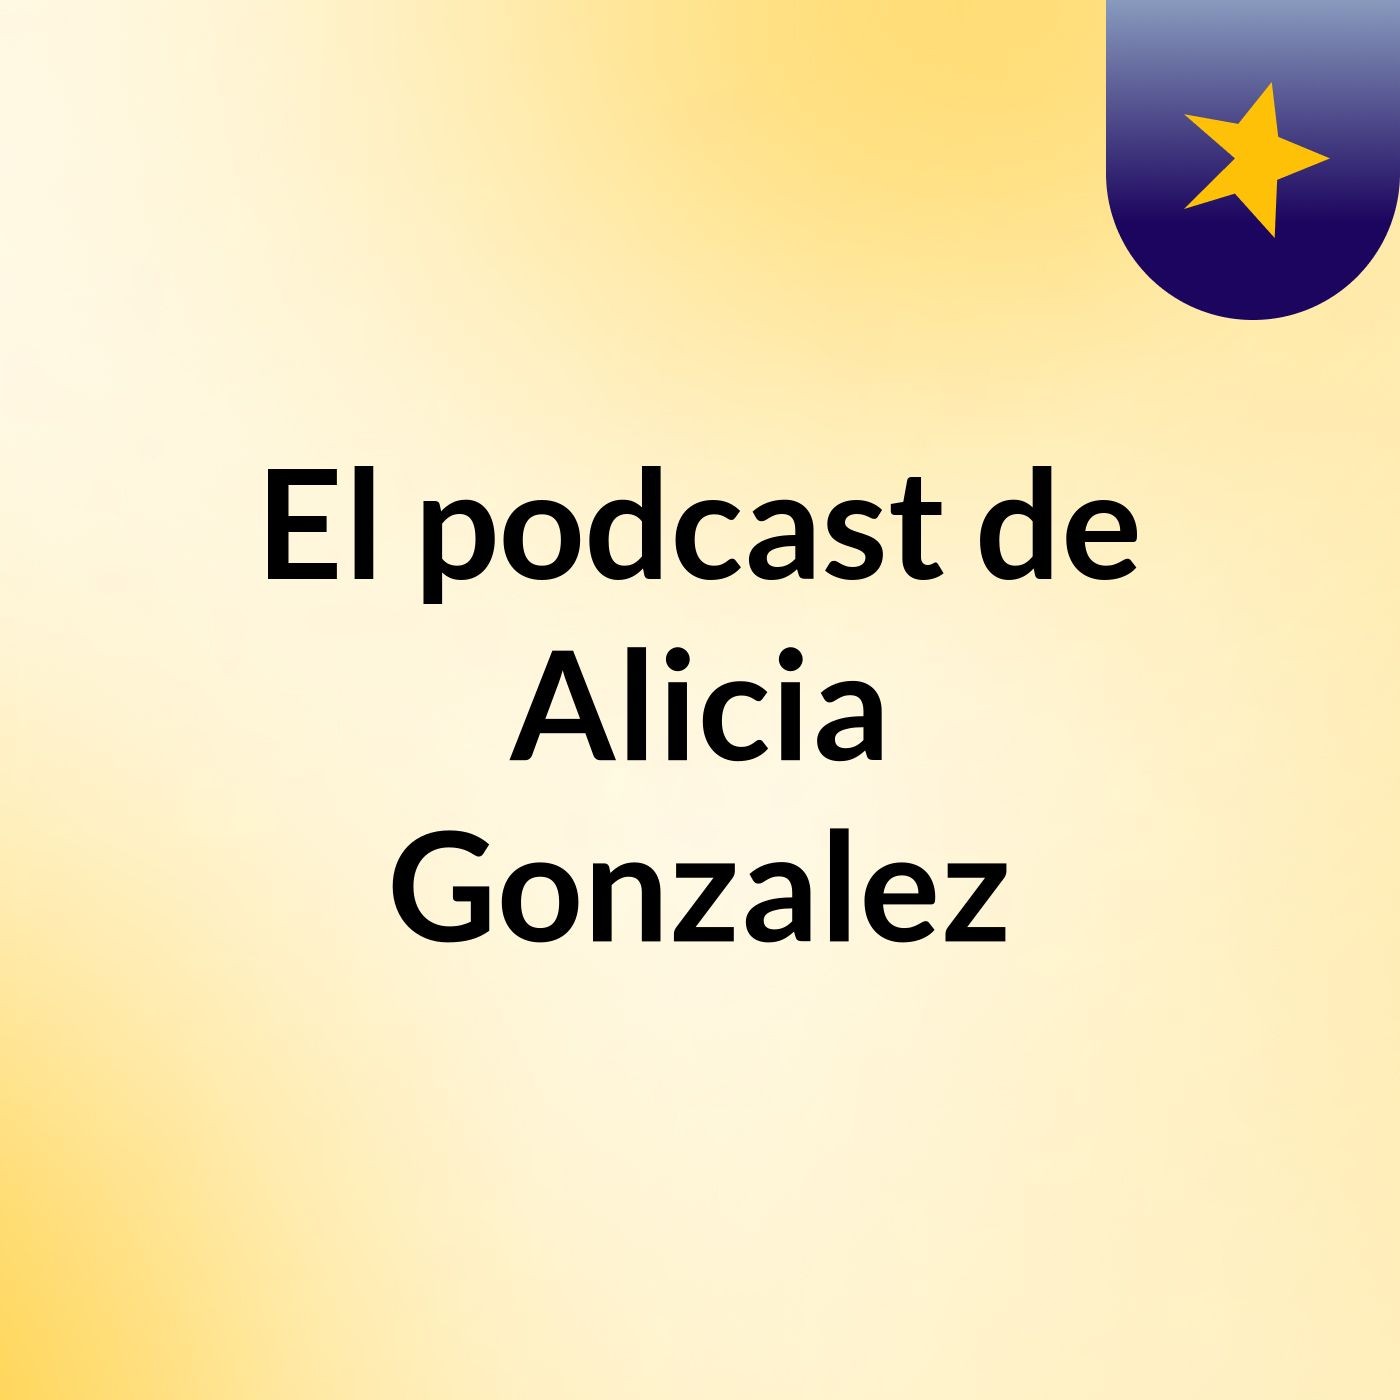 El podcast de Alicia Gonzalez